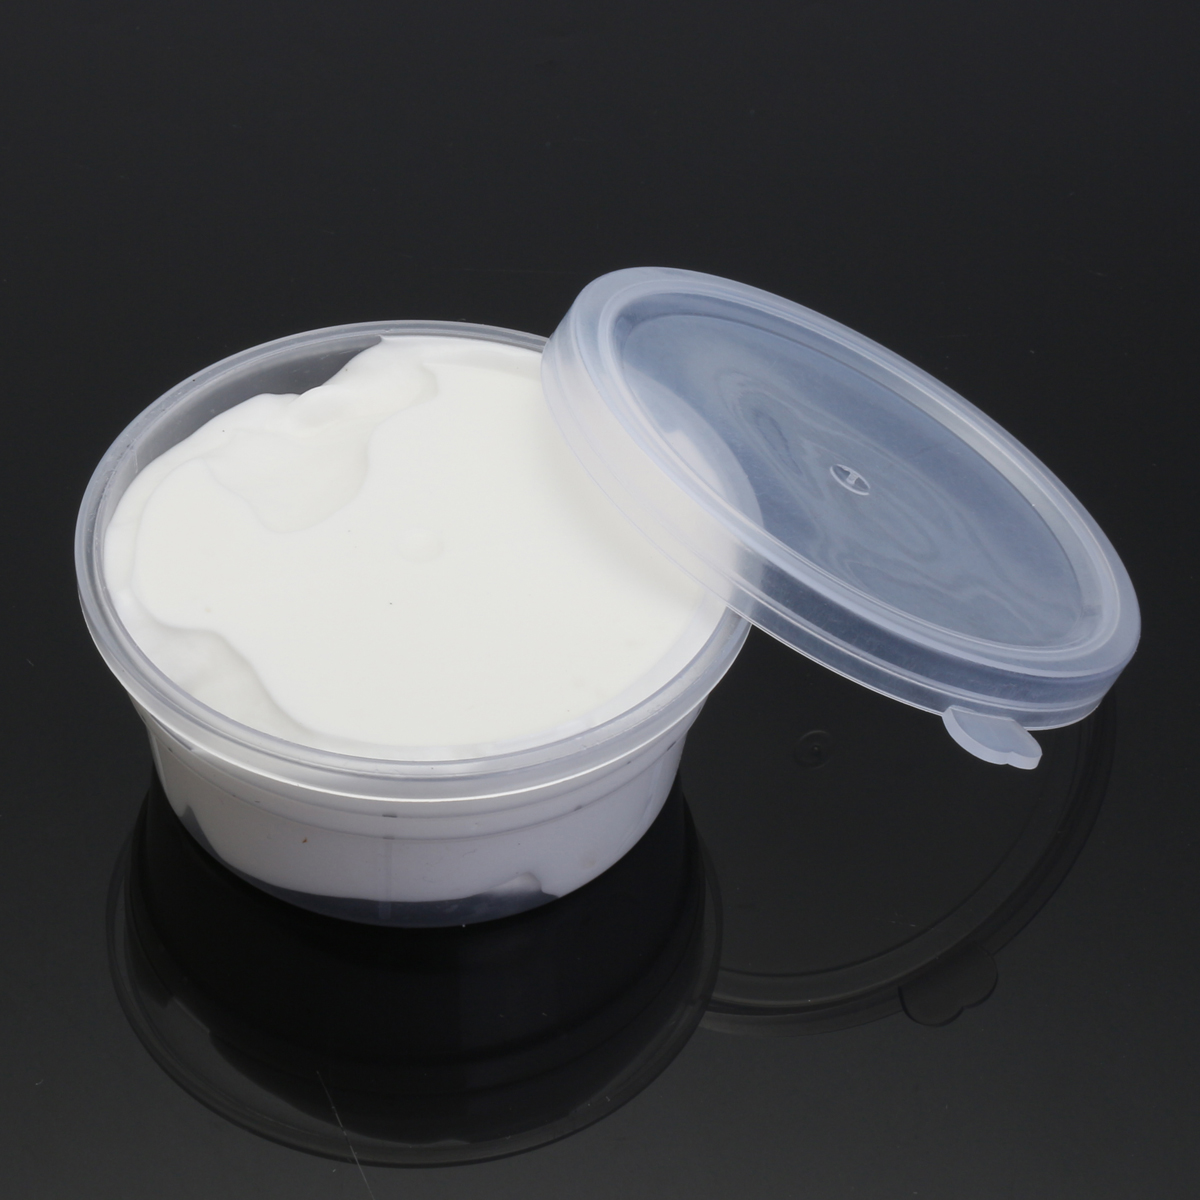 DIY-Slime-Kit-Snow-Mud-Clay-Plasticine-Styrofoam-Beads-Balls-White-Floam-Toy-Gift-1192180-5